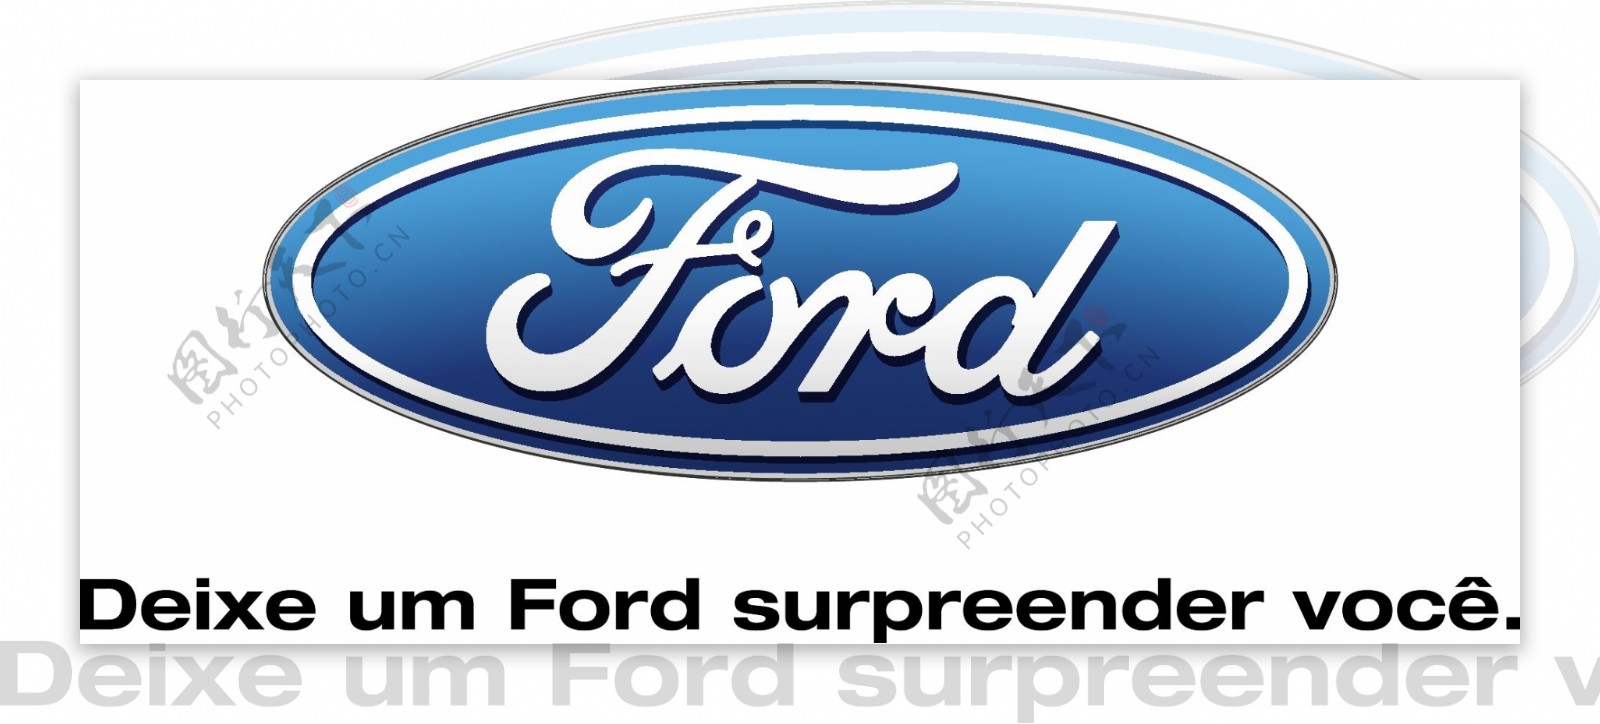 Ford福特标志